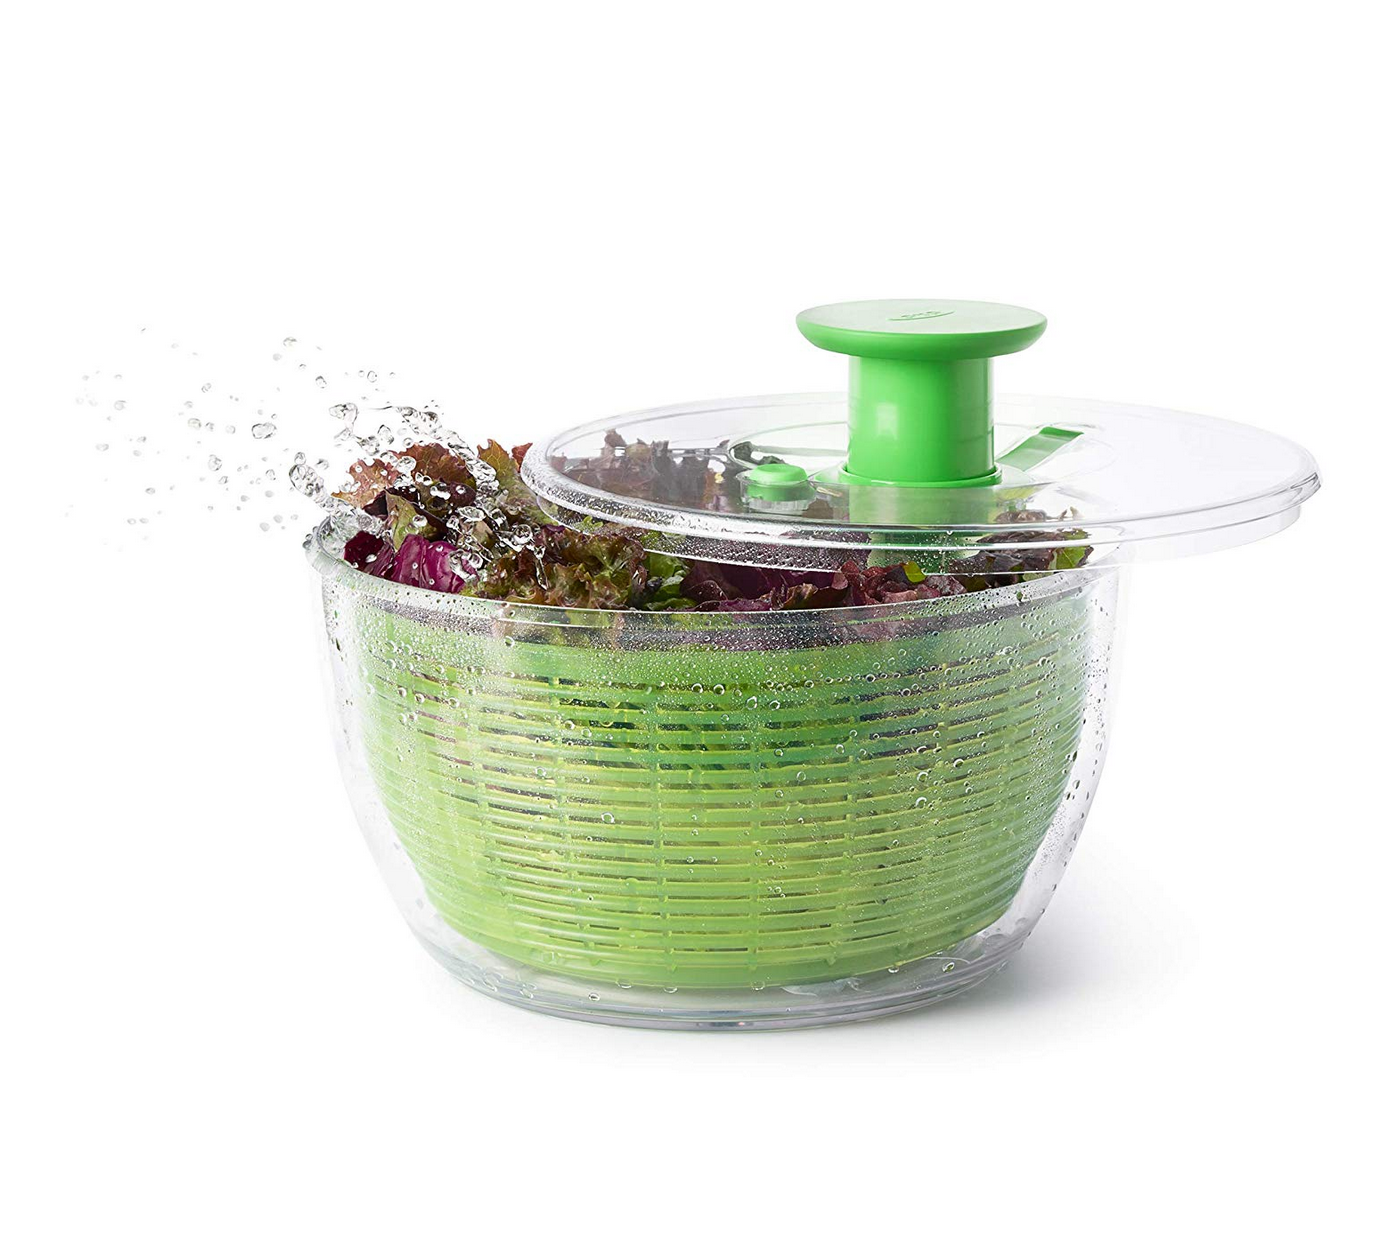 OXO Salad Spinner, 1 EA